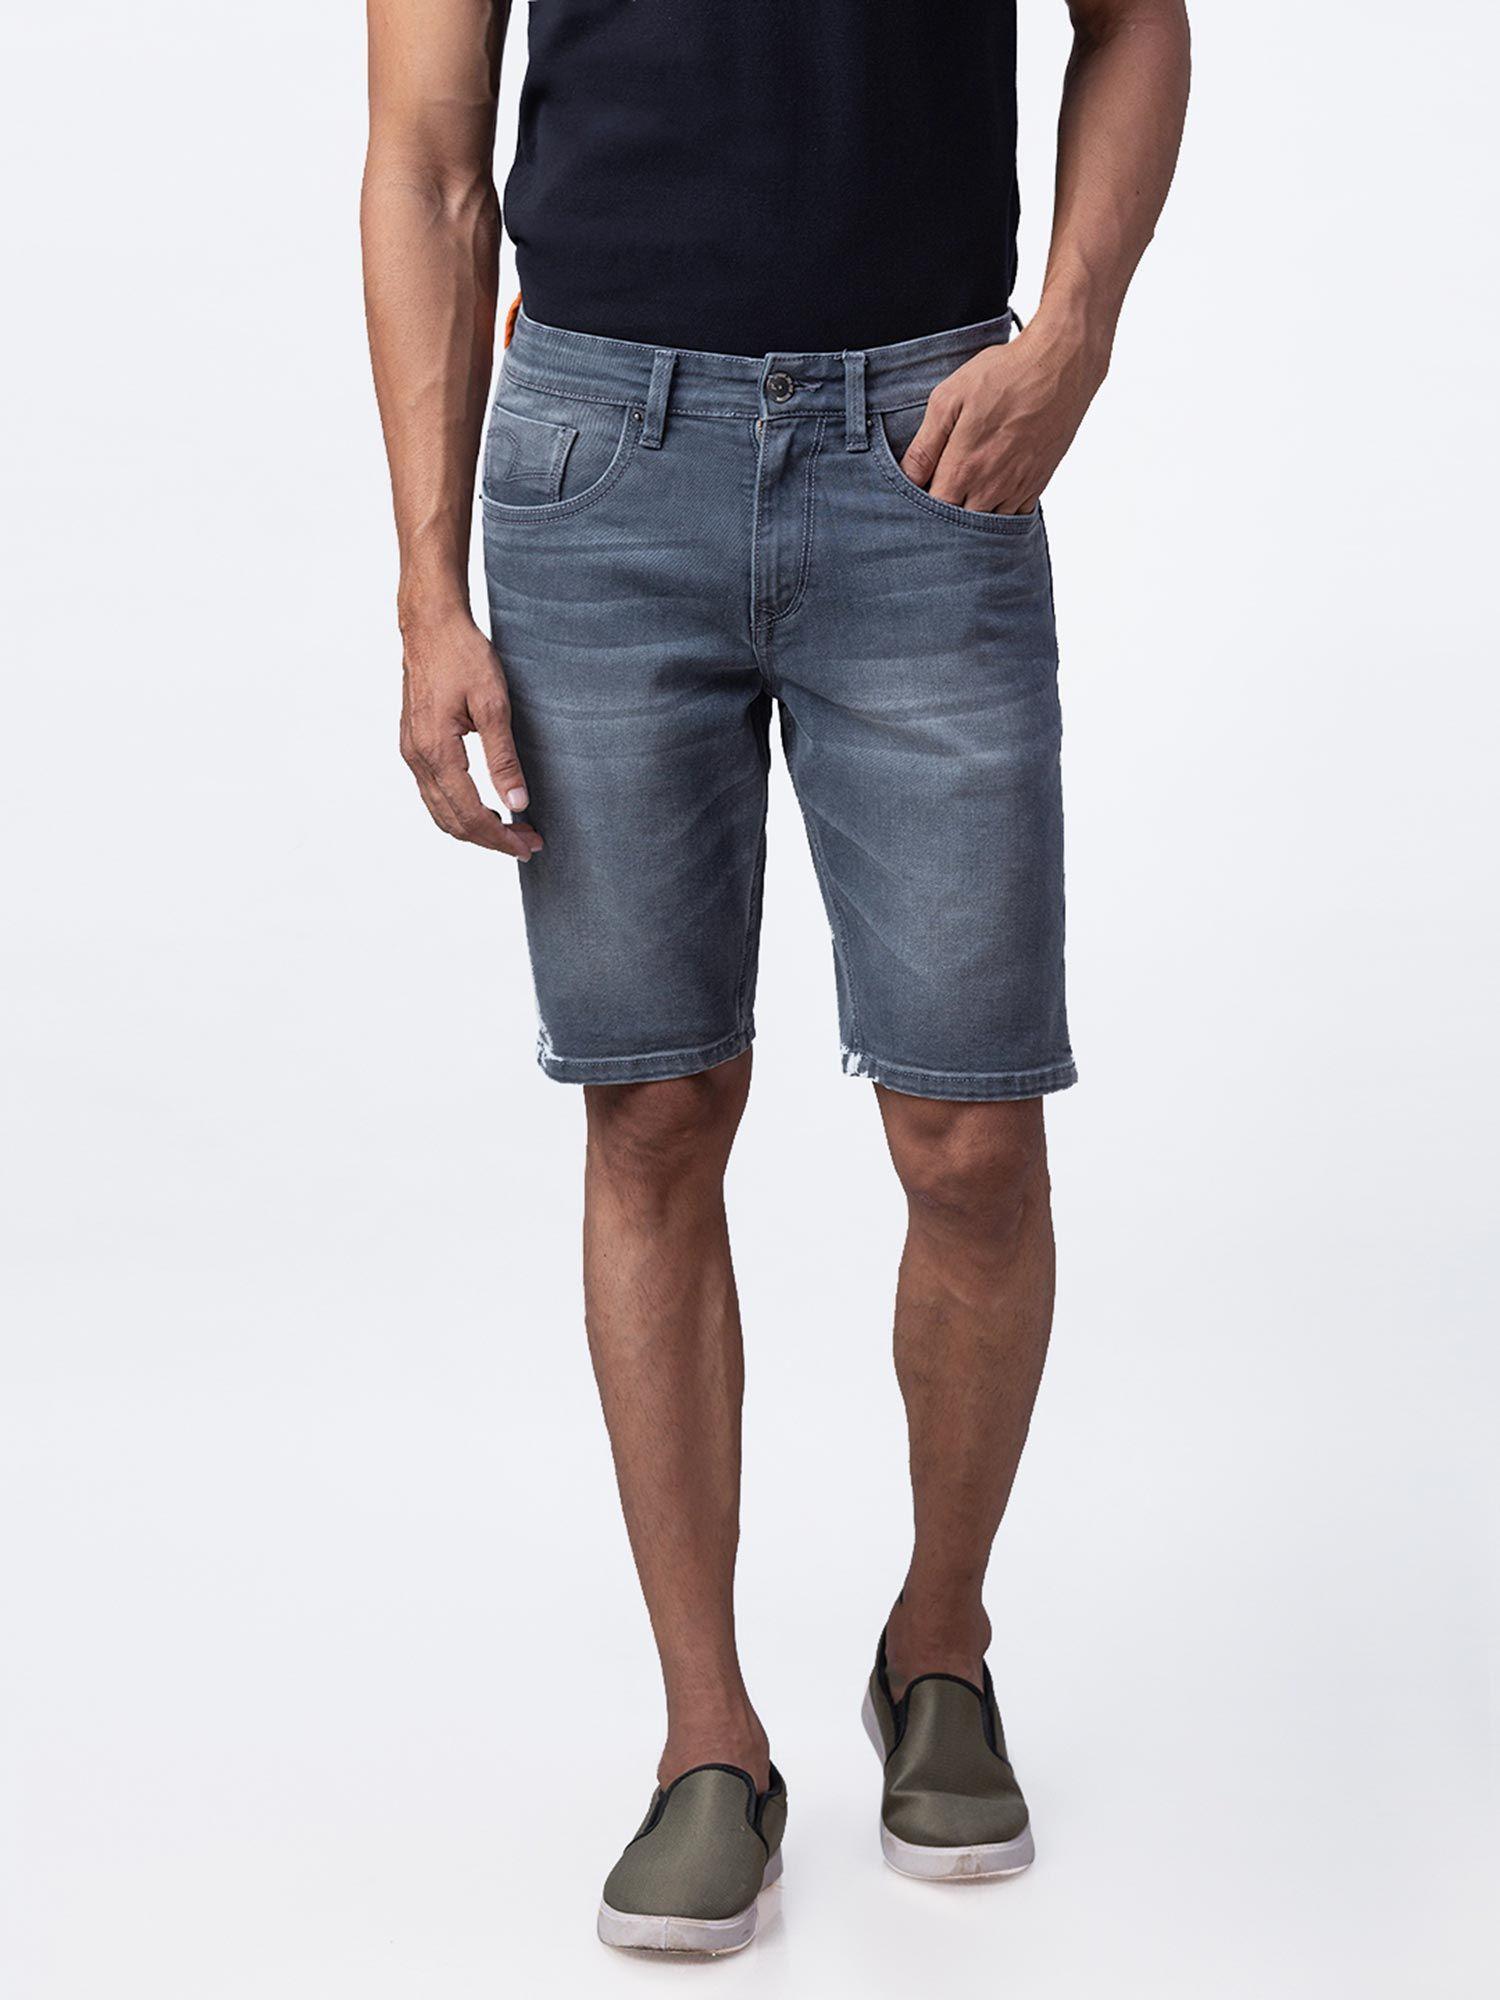 grey-cotton-regular-fit-shorts-for-men